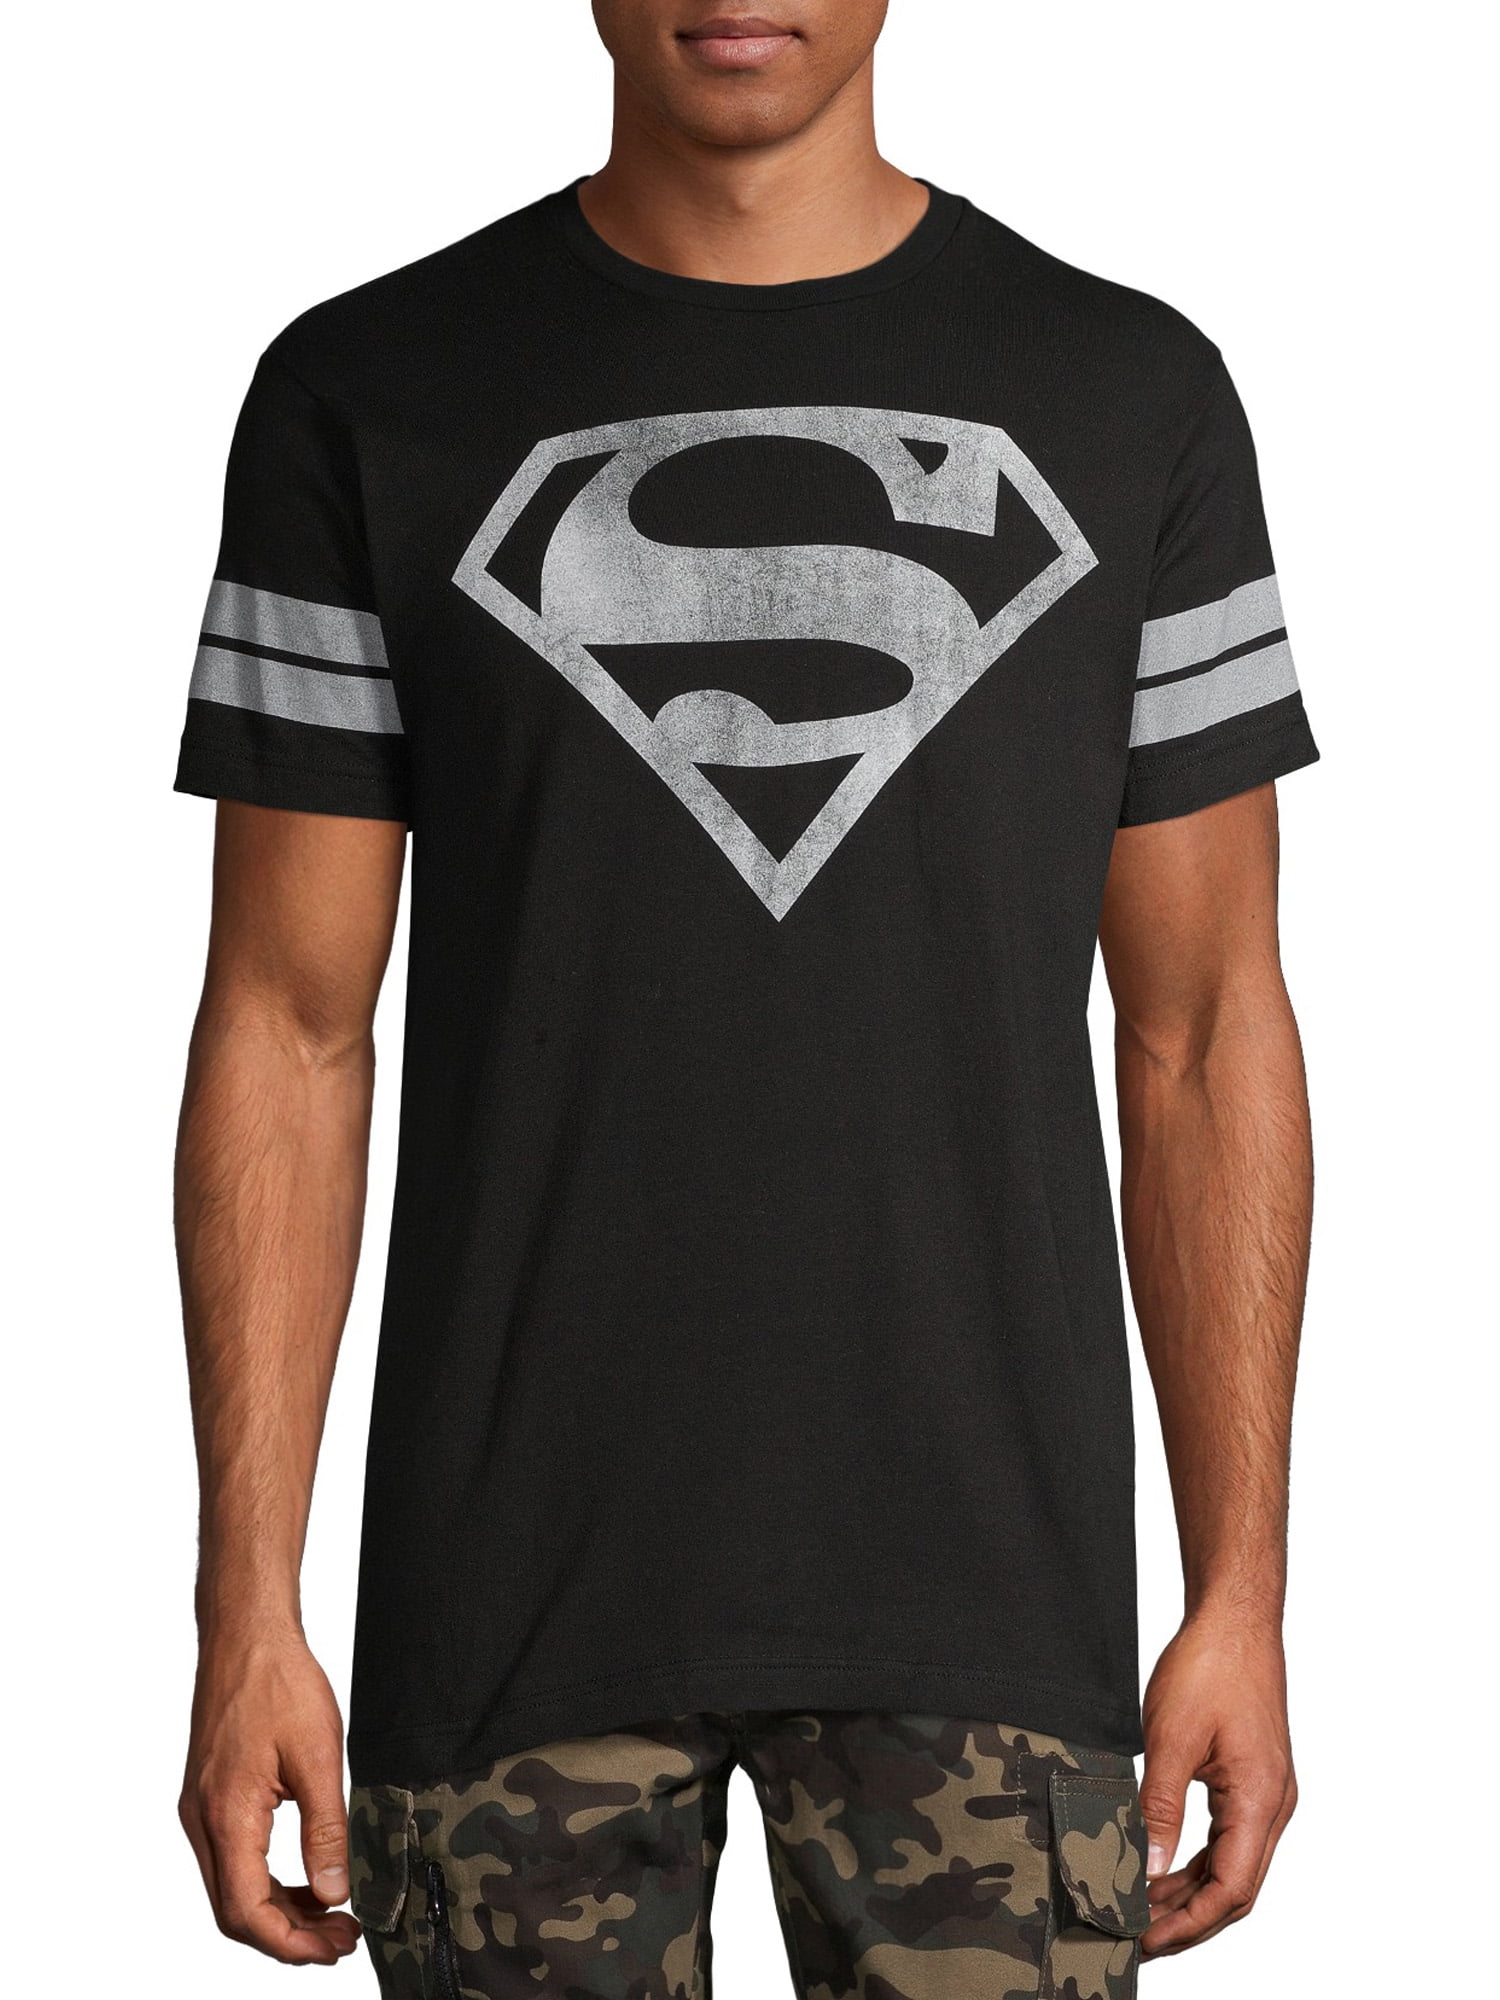 DC COMICS SUPERMAN SILVER LOGO ADULT UNISEX T-SHIRT IN STOCK 